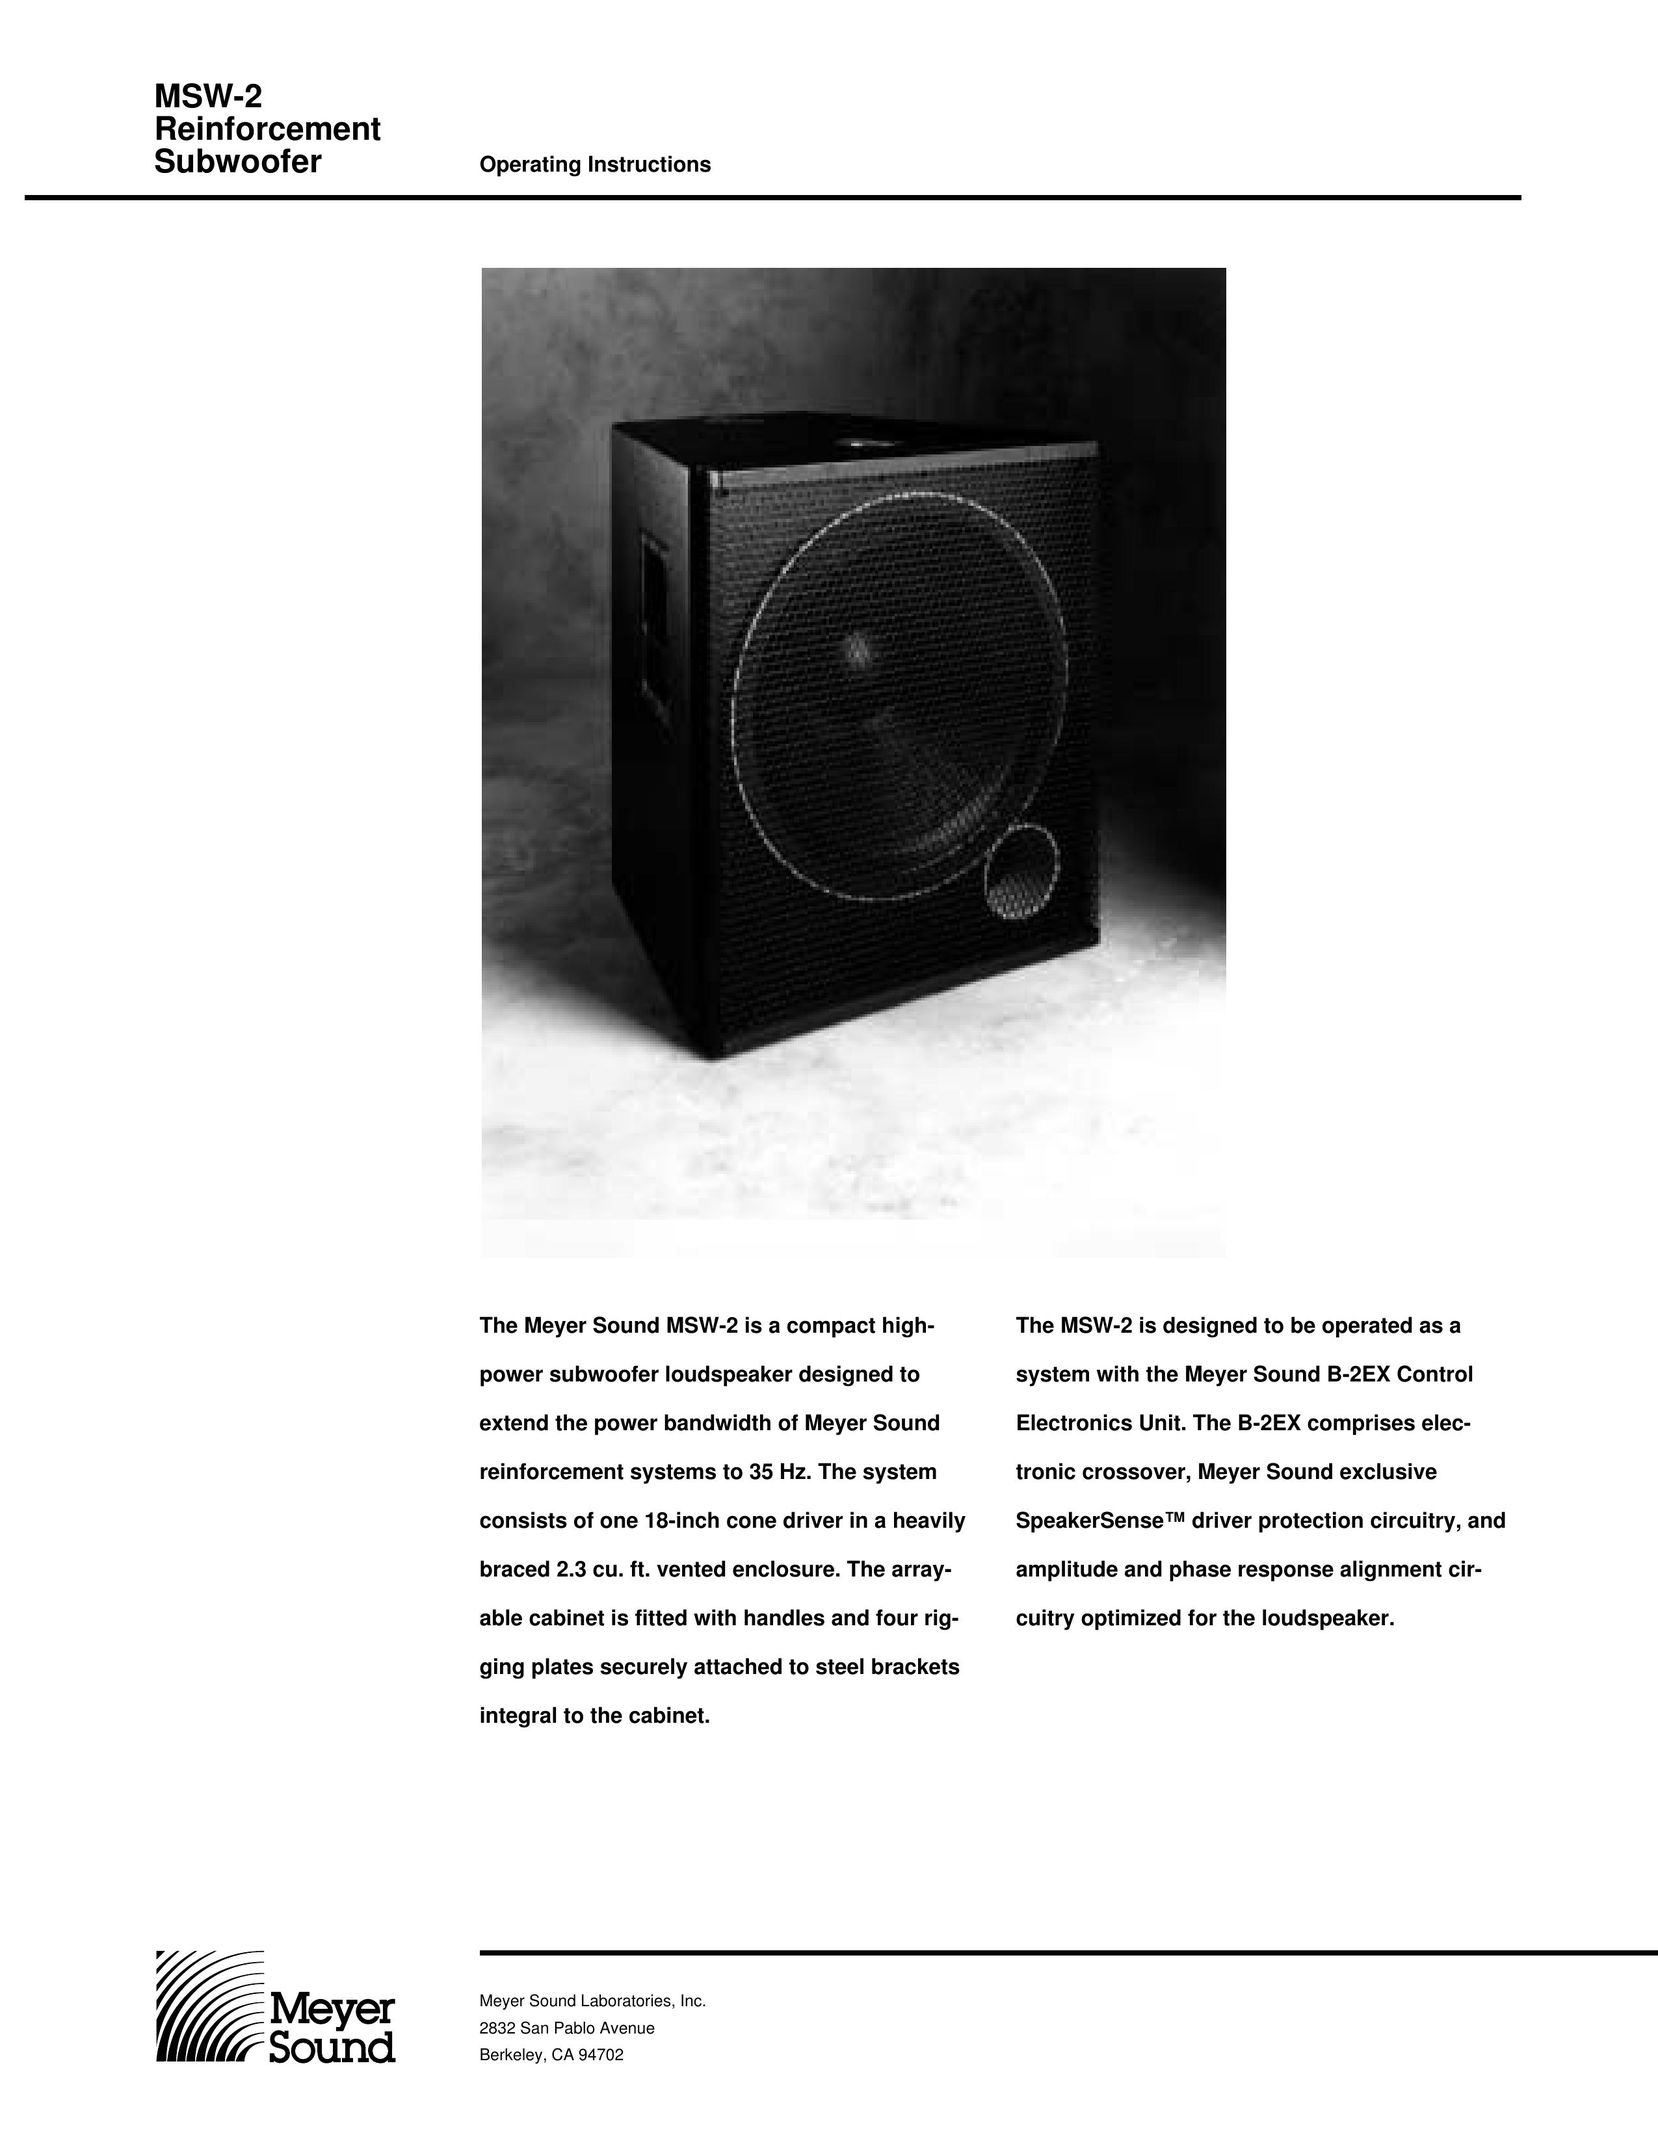 Meyer Sound MSW-2 Speaker User Manual